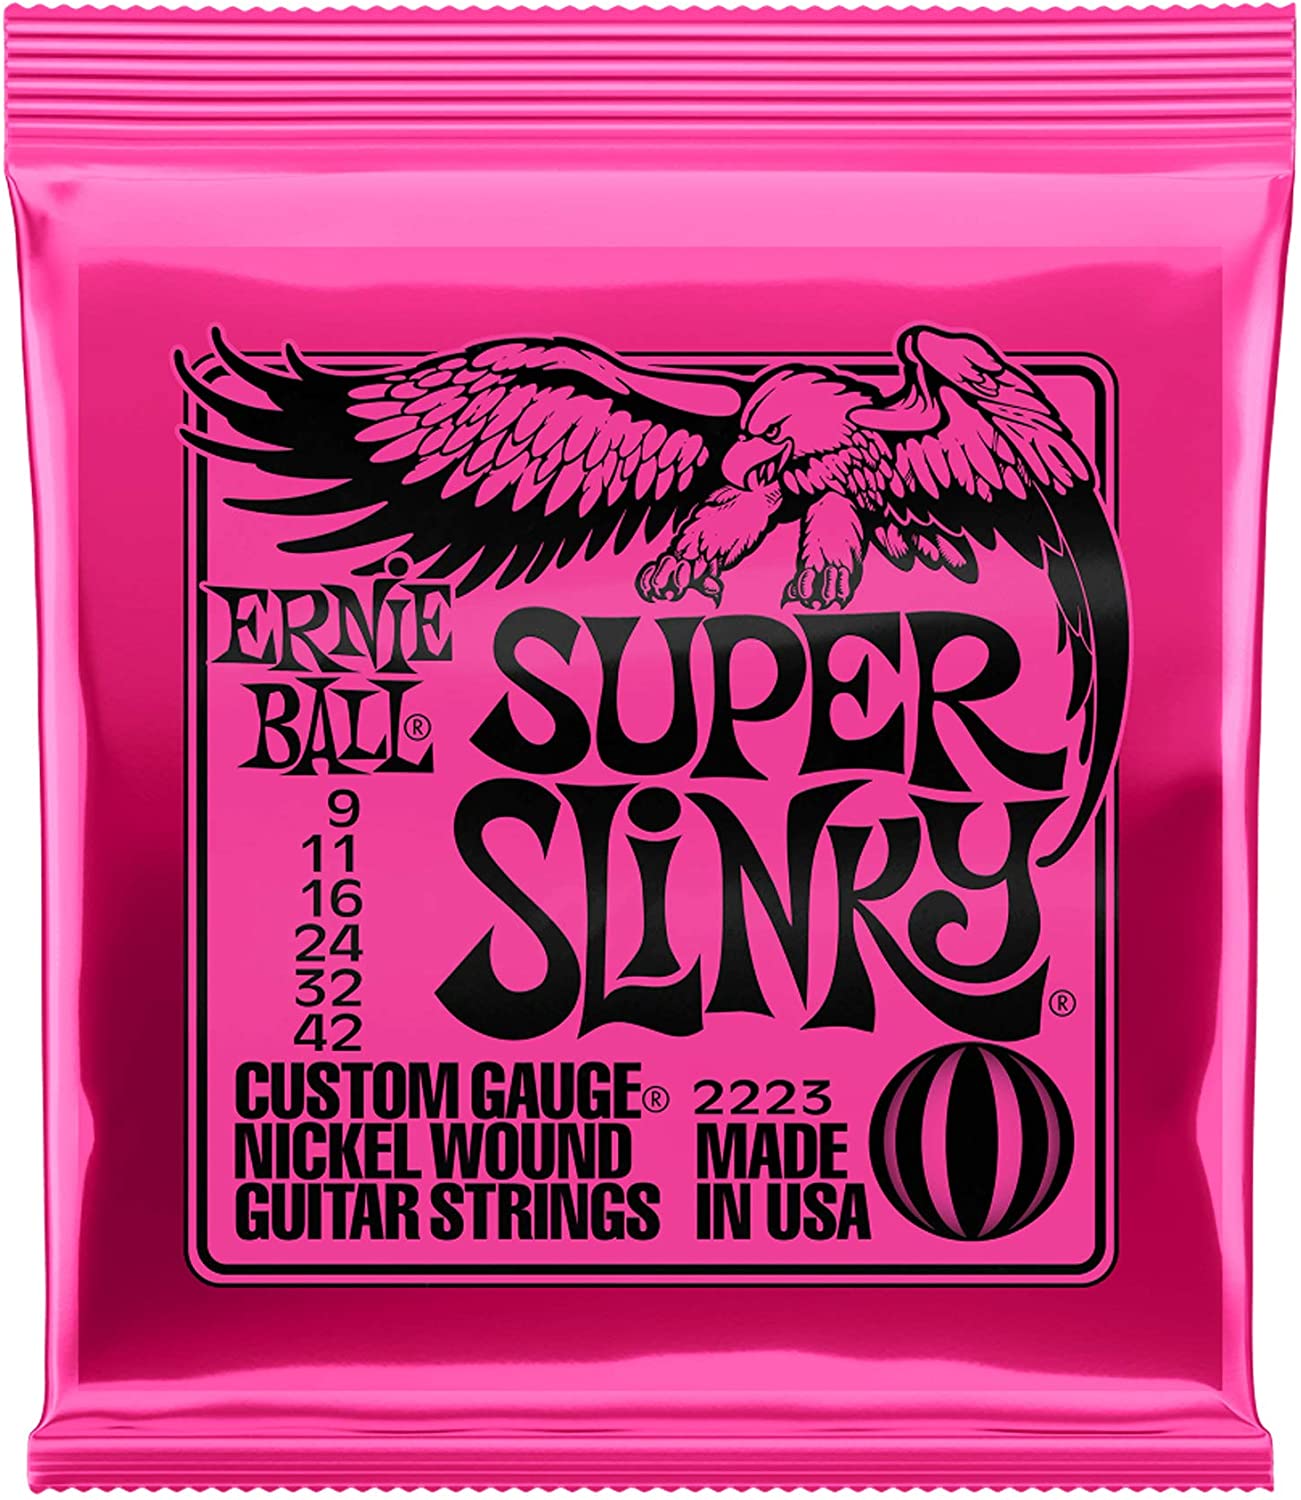 Se Ernie Ball - Super Slinky 2223 10 stk hos Allround Musik